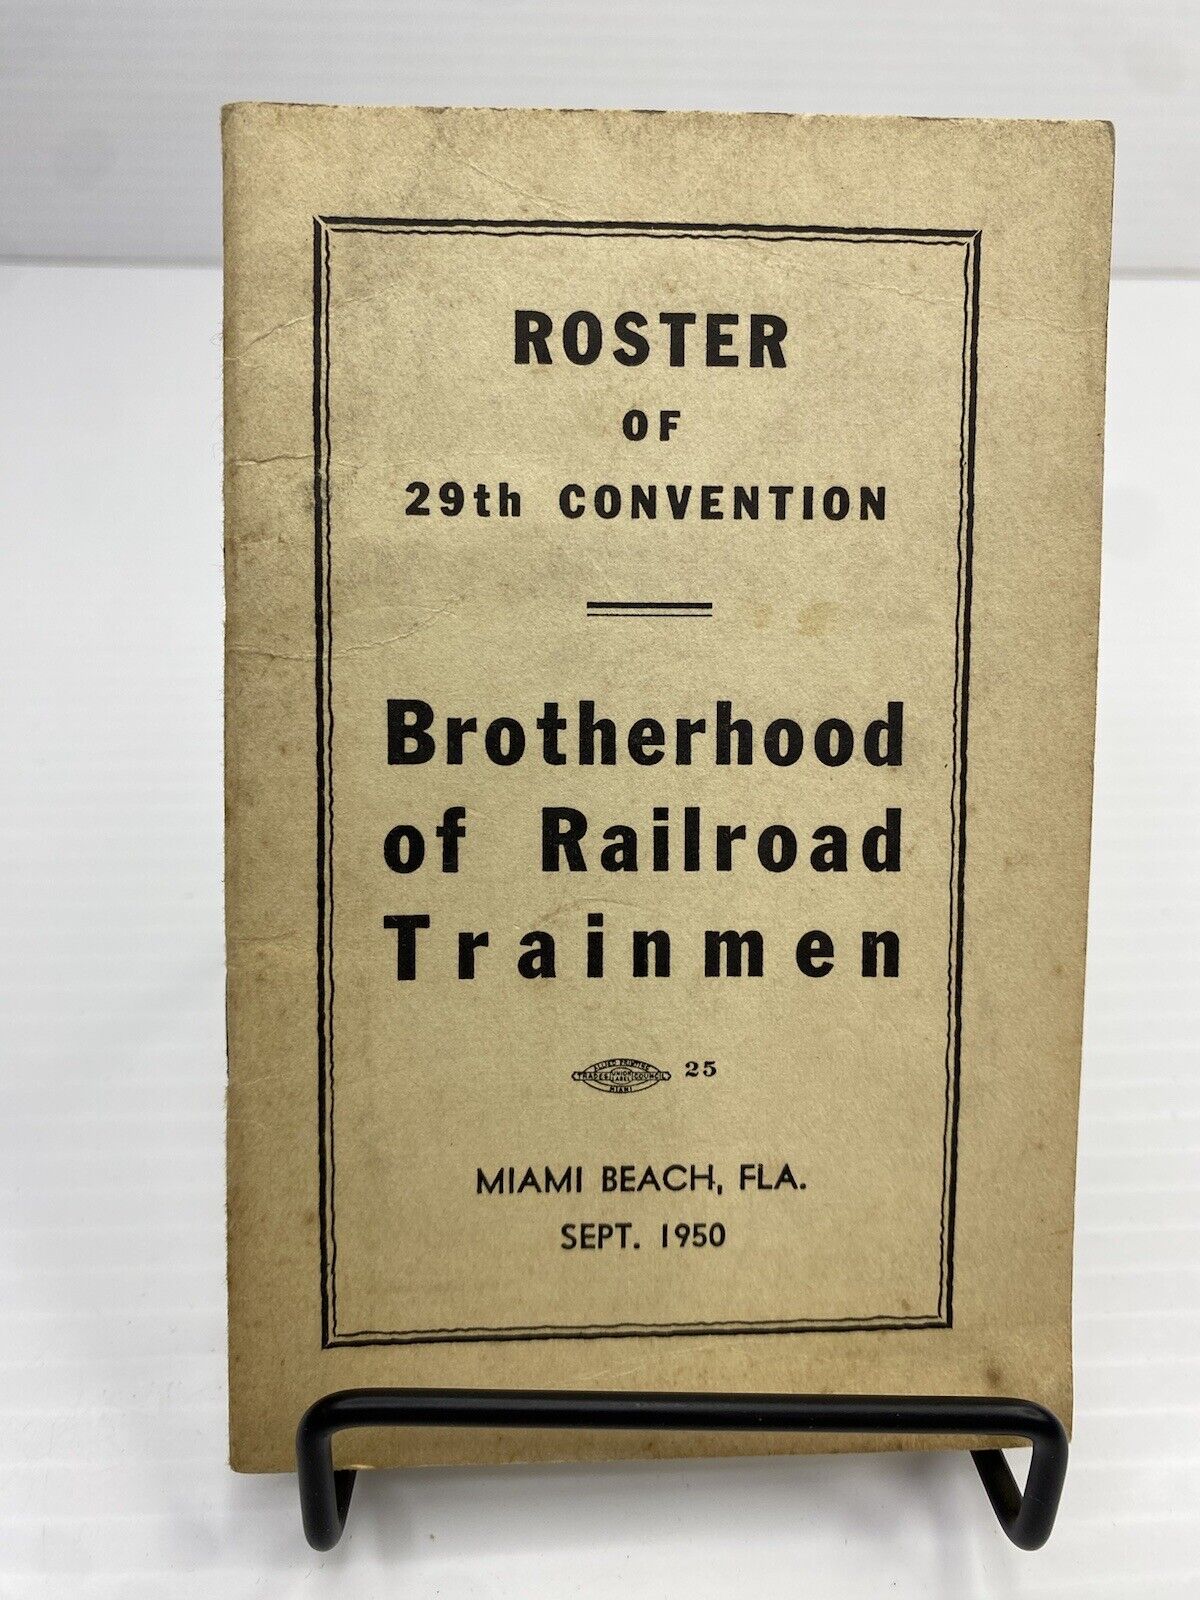 1950 Miami Beach Fla Roster of 29th Convention Brotherhood of Railroad Trainmen